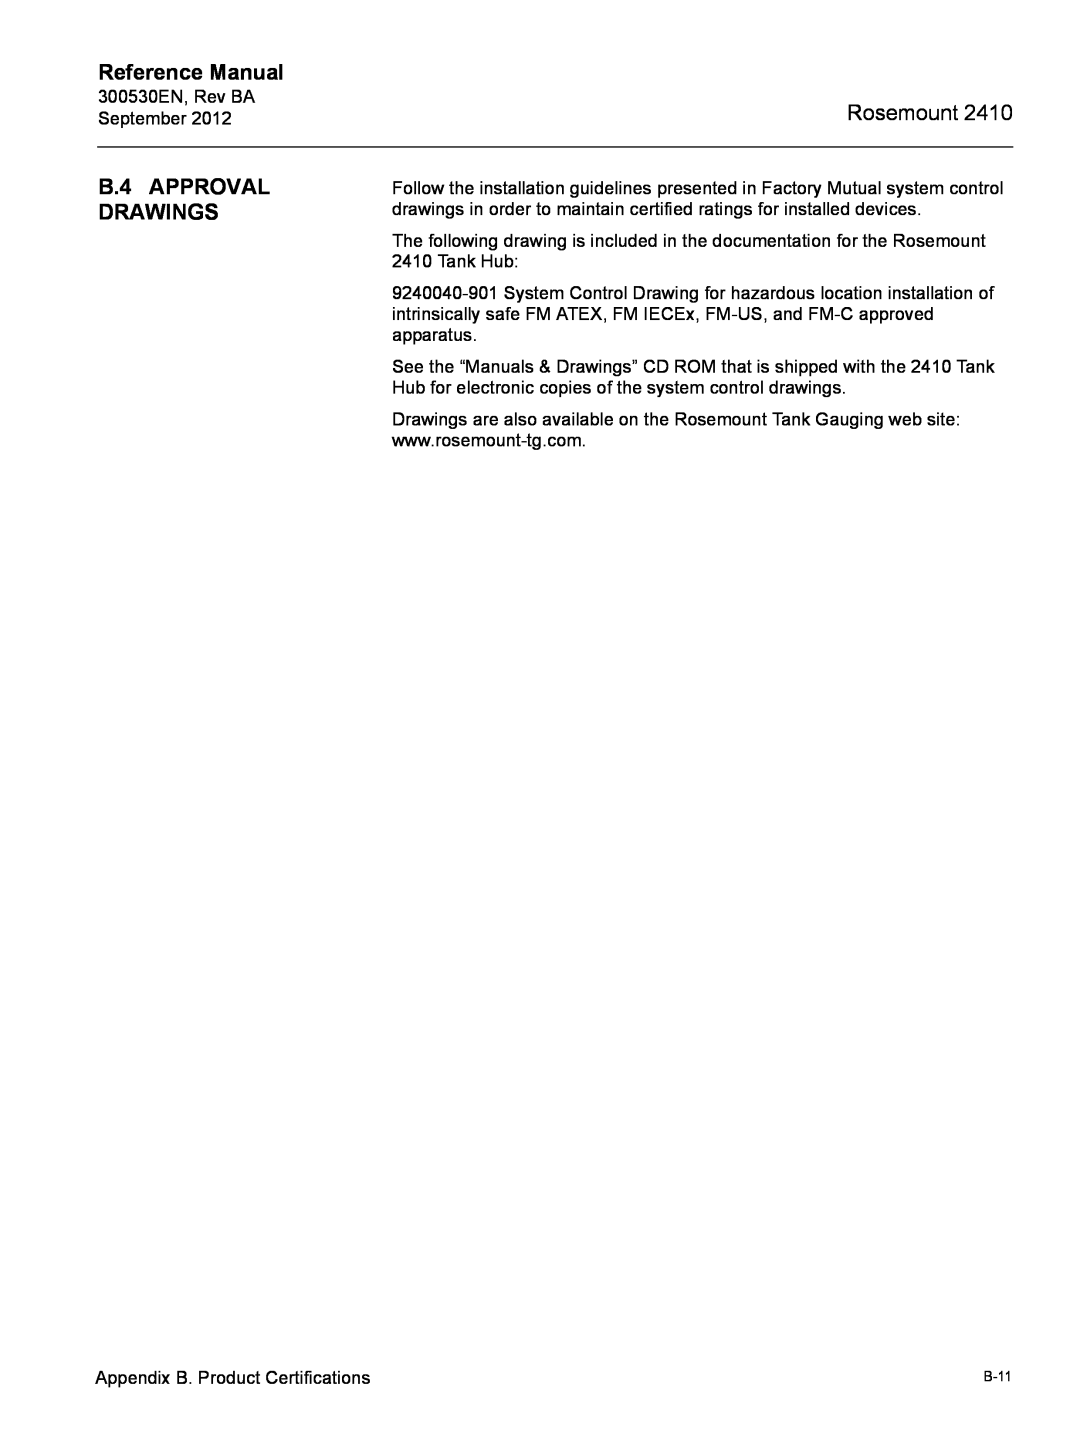 Emerson Process Management Rosemount 2410 manual B.4 APPROVAL DRAWINGS, Reference Manual, B-11 